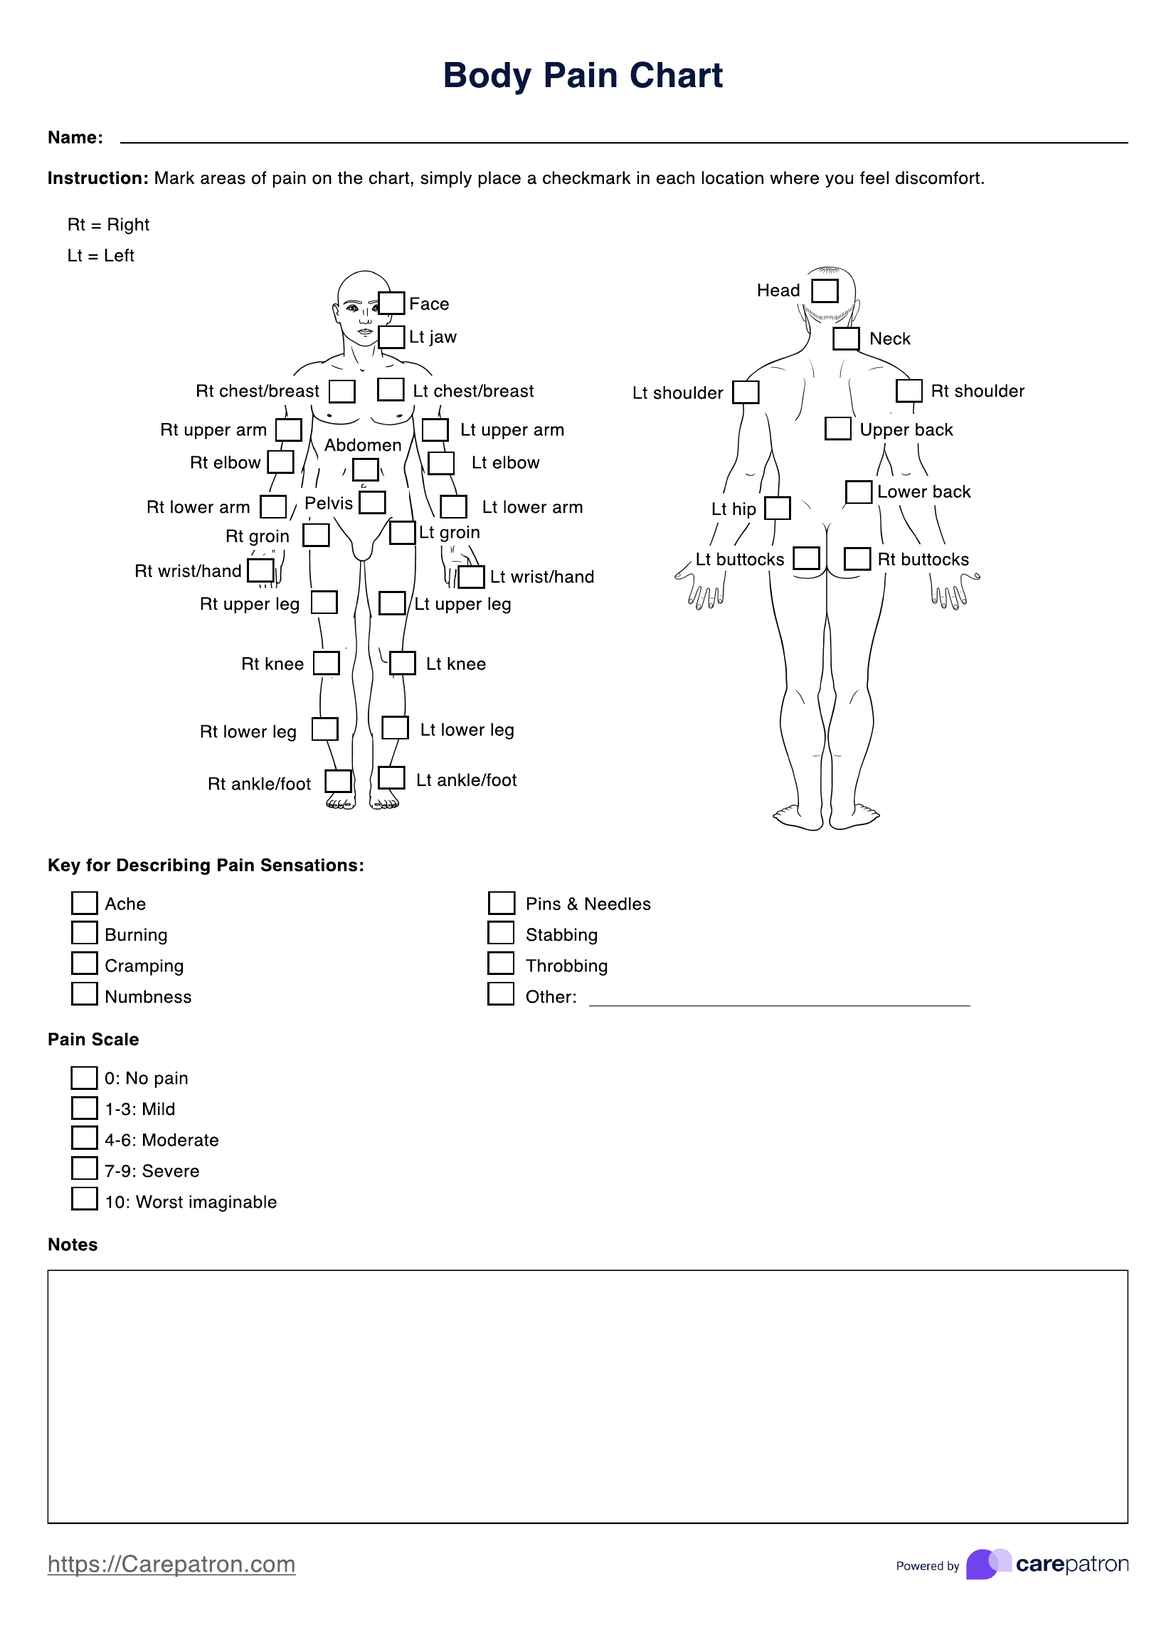 Body Pain Charts PDF Example